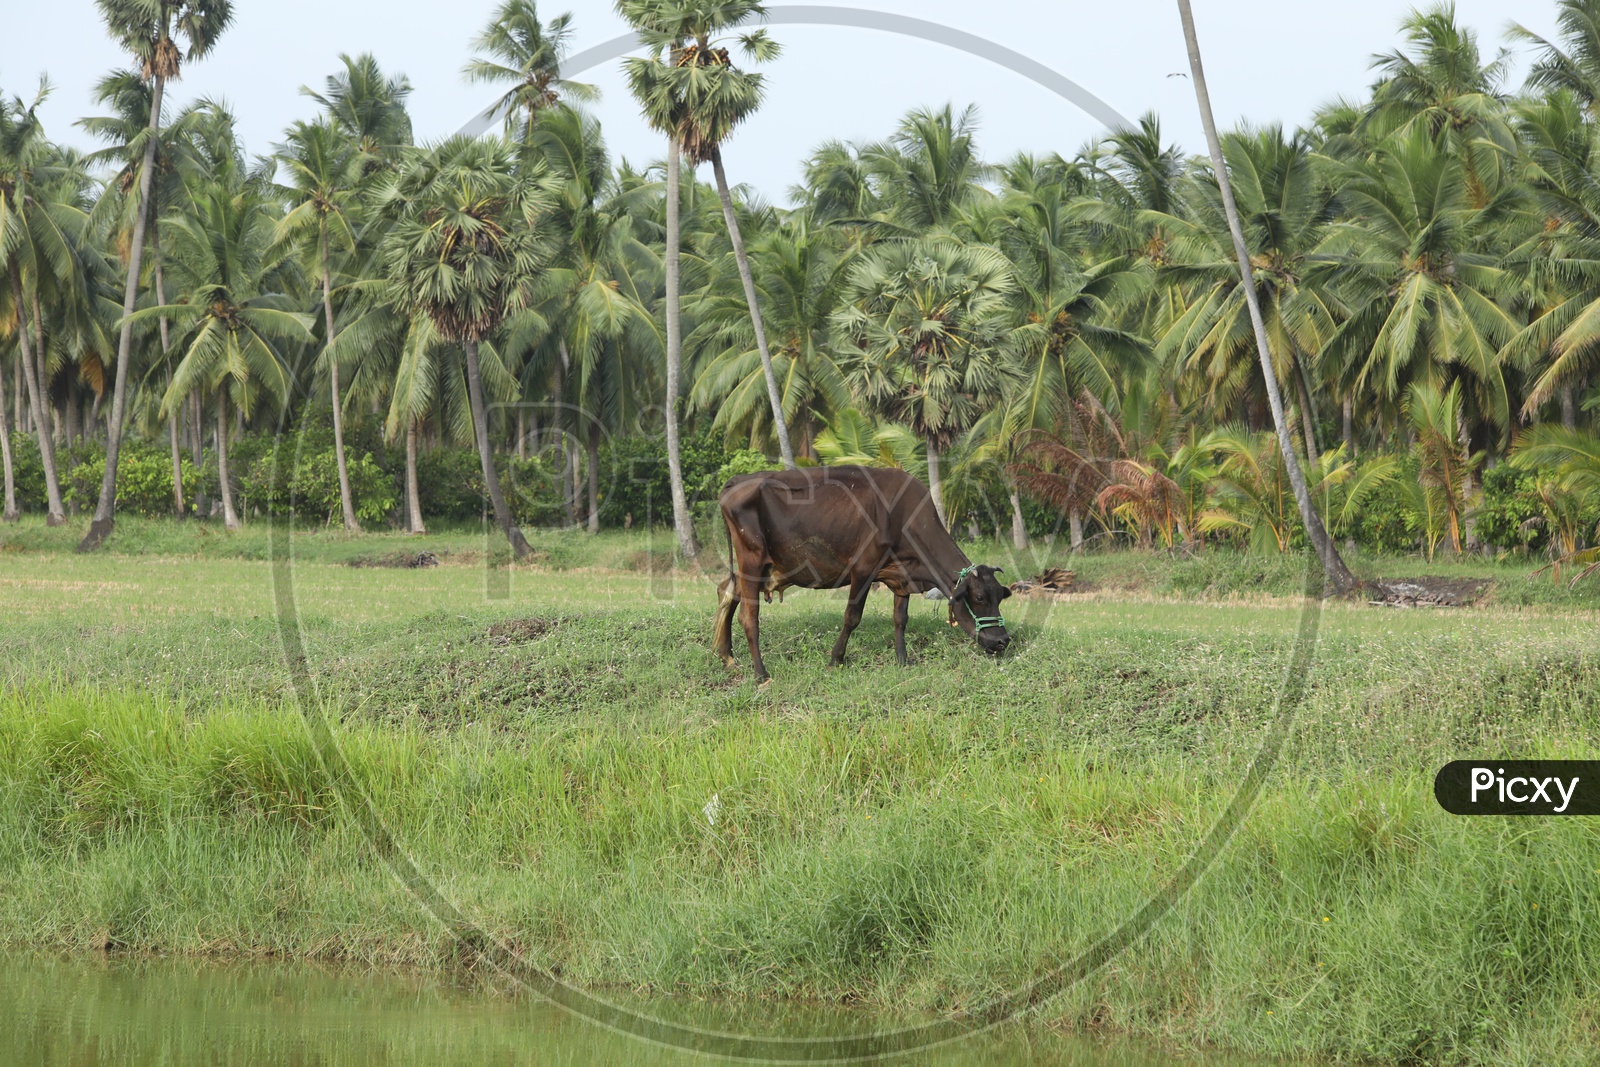 A Buffalo Grazing Grass In Rural Village